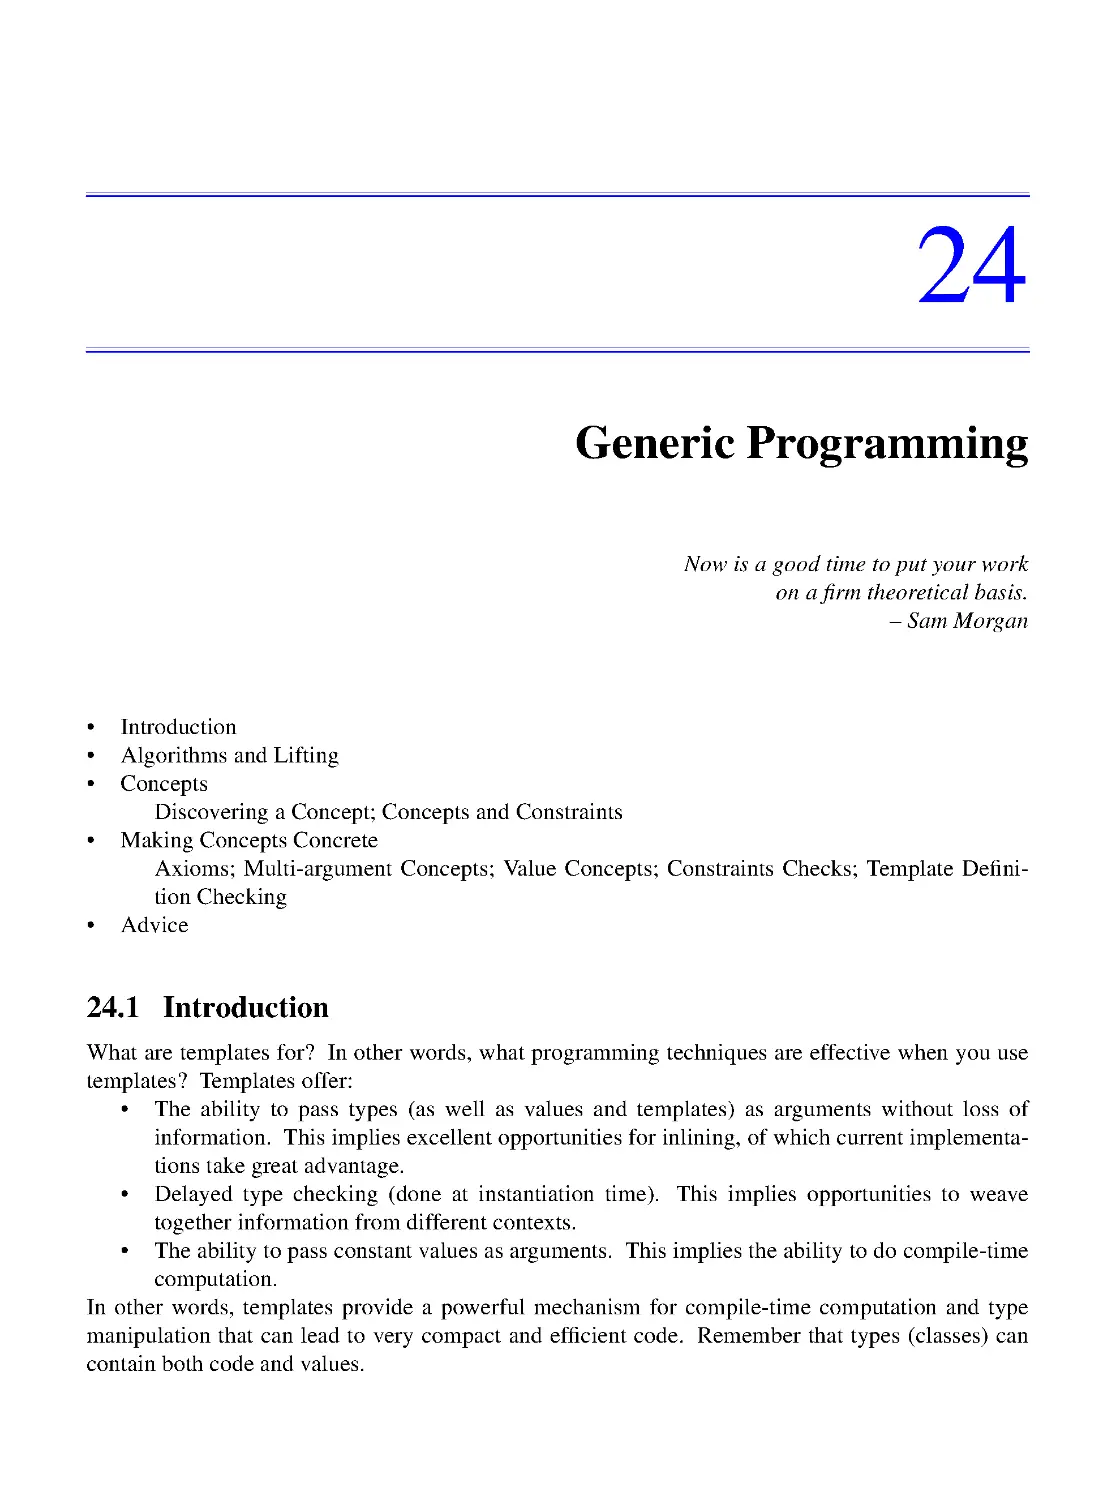 24. Generic Programming